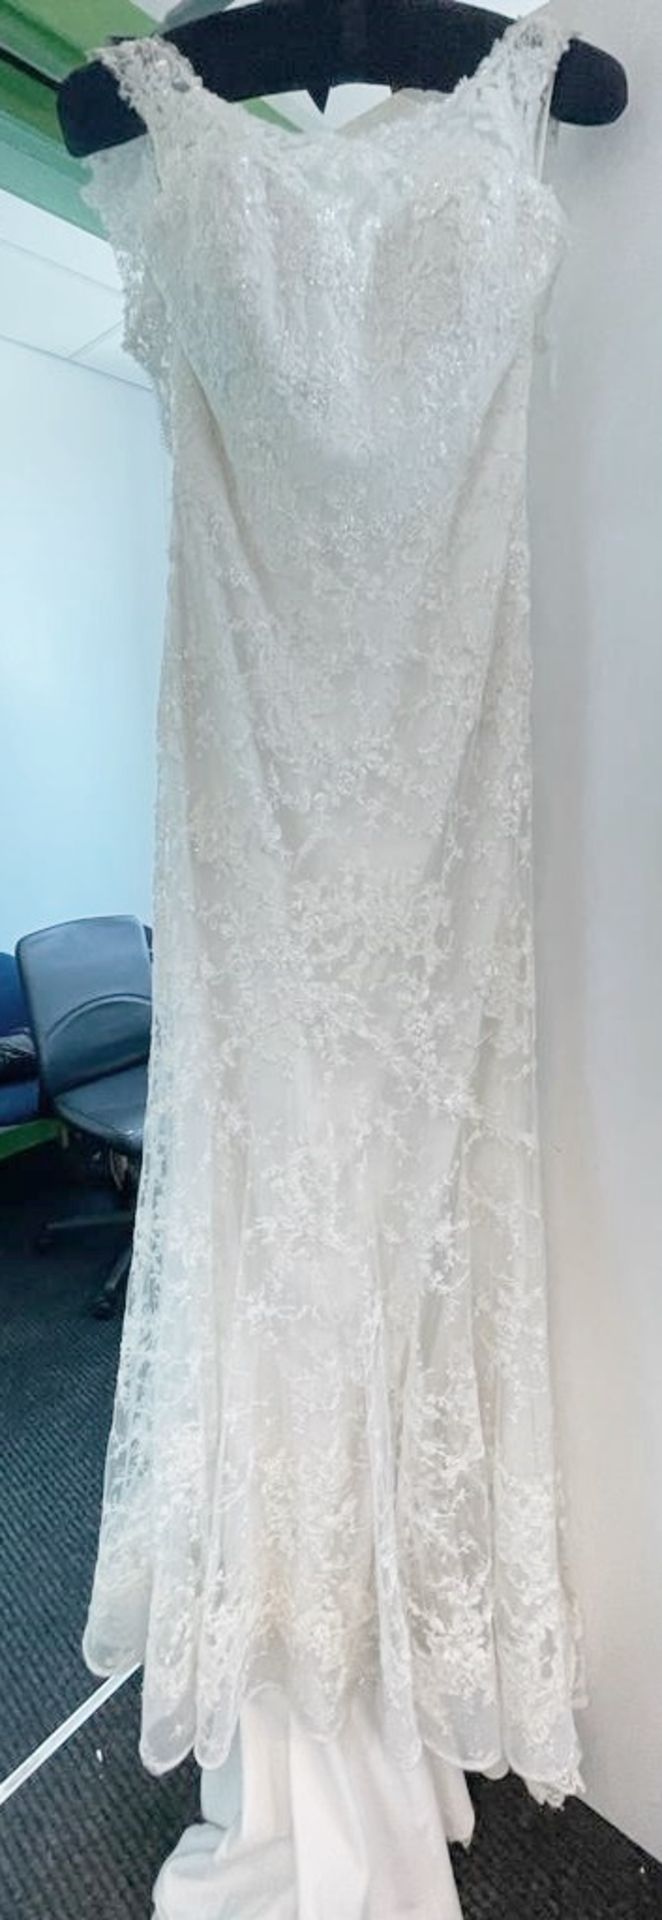 1 x LUSAN MANDONGUS 'Lorelle' Fishtale Designer Wedding Dress Bridal Gown, With Chantilly Lace